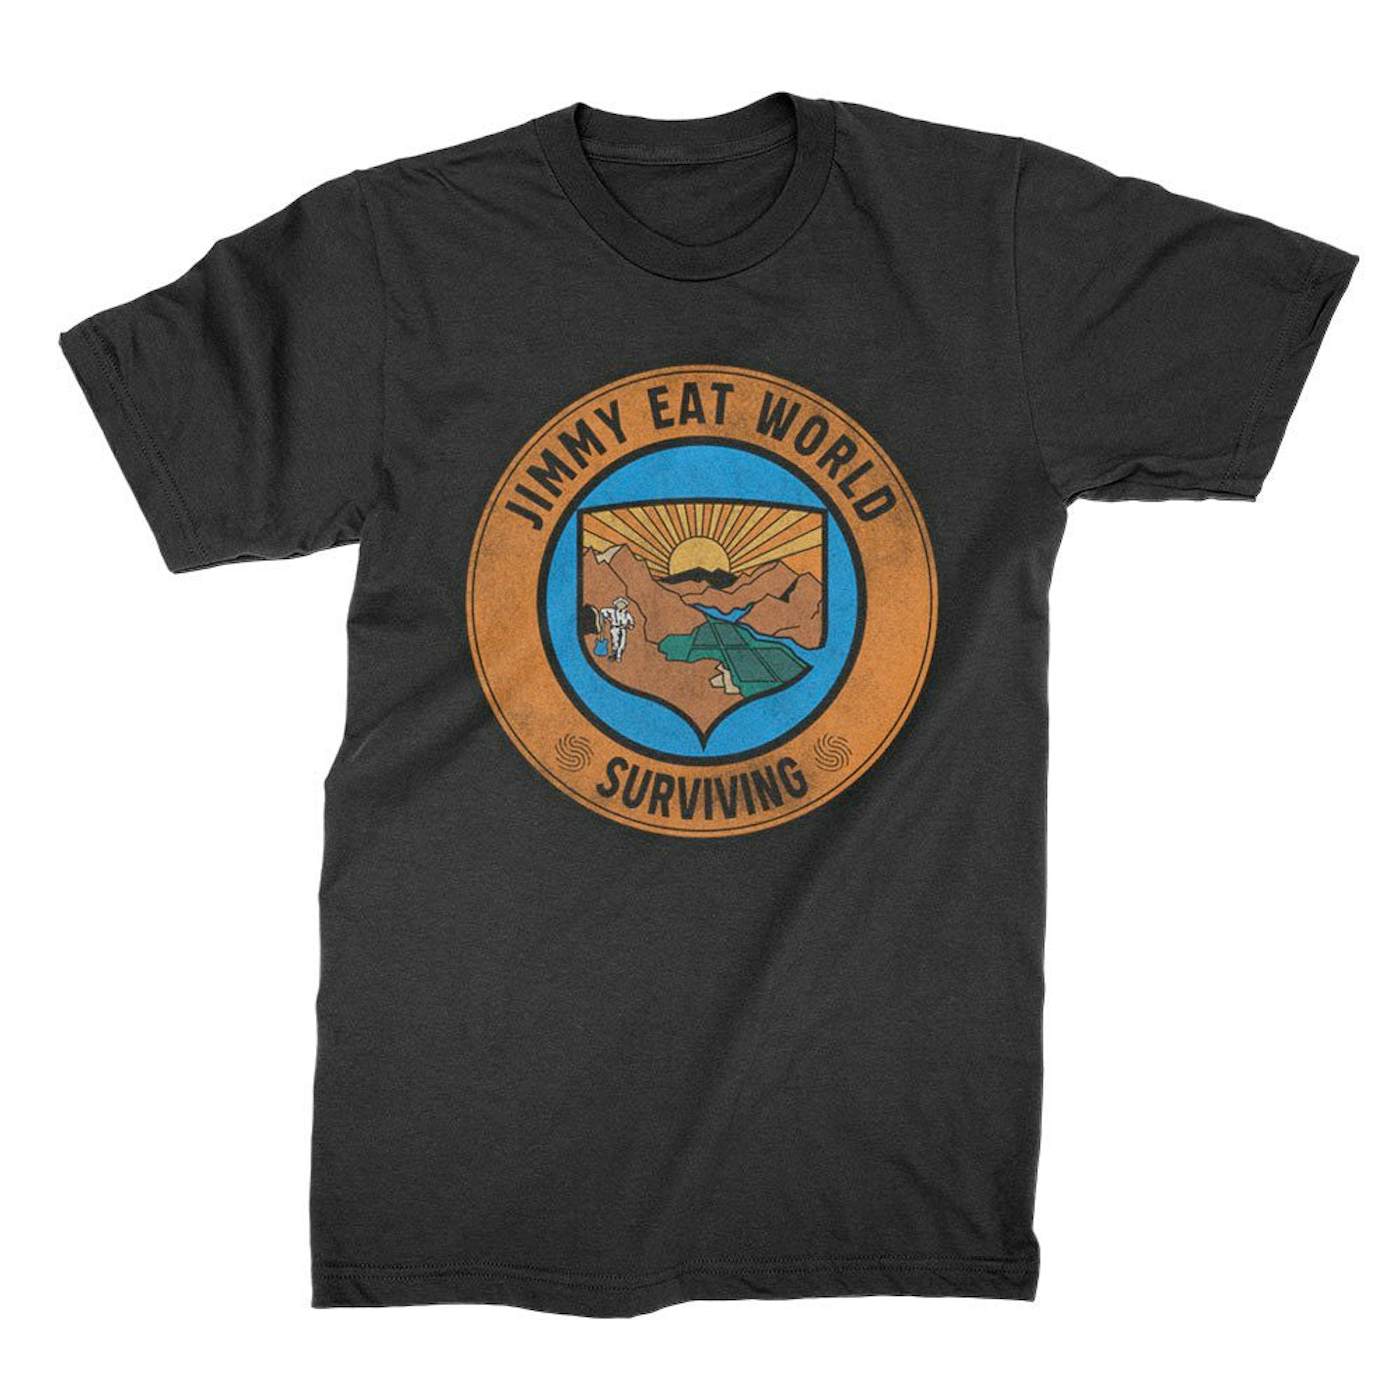 Jimmy Eat World "Surviving Crest" T-Shirt